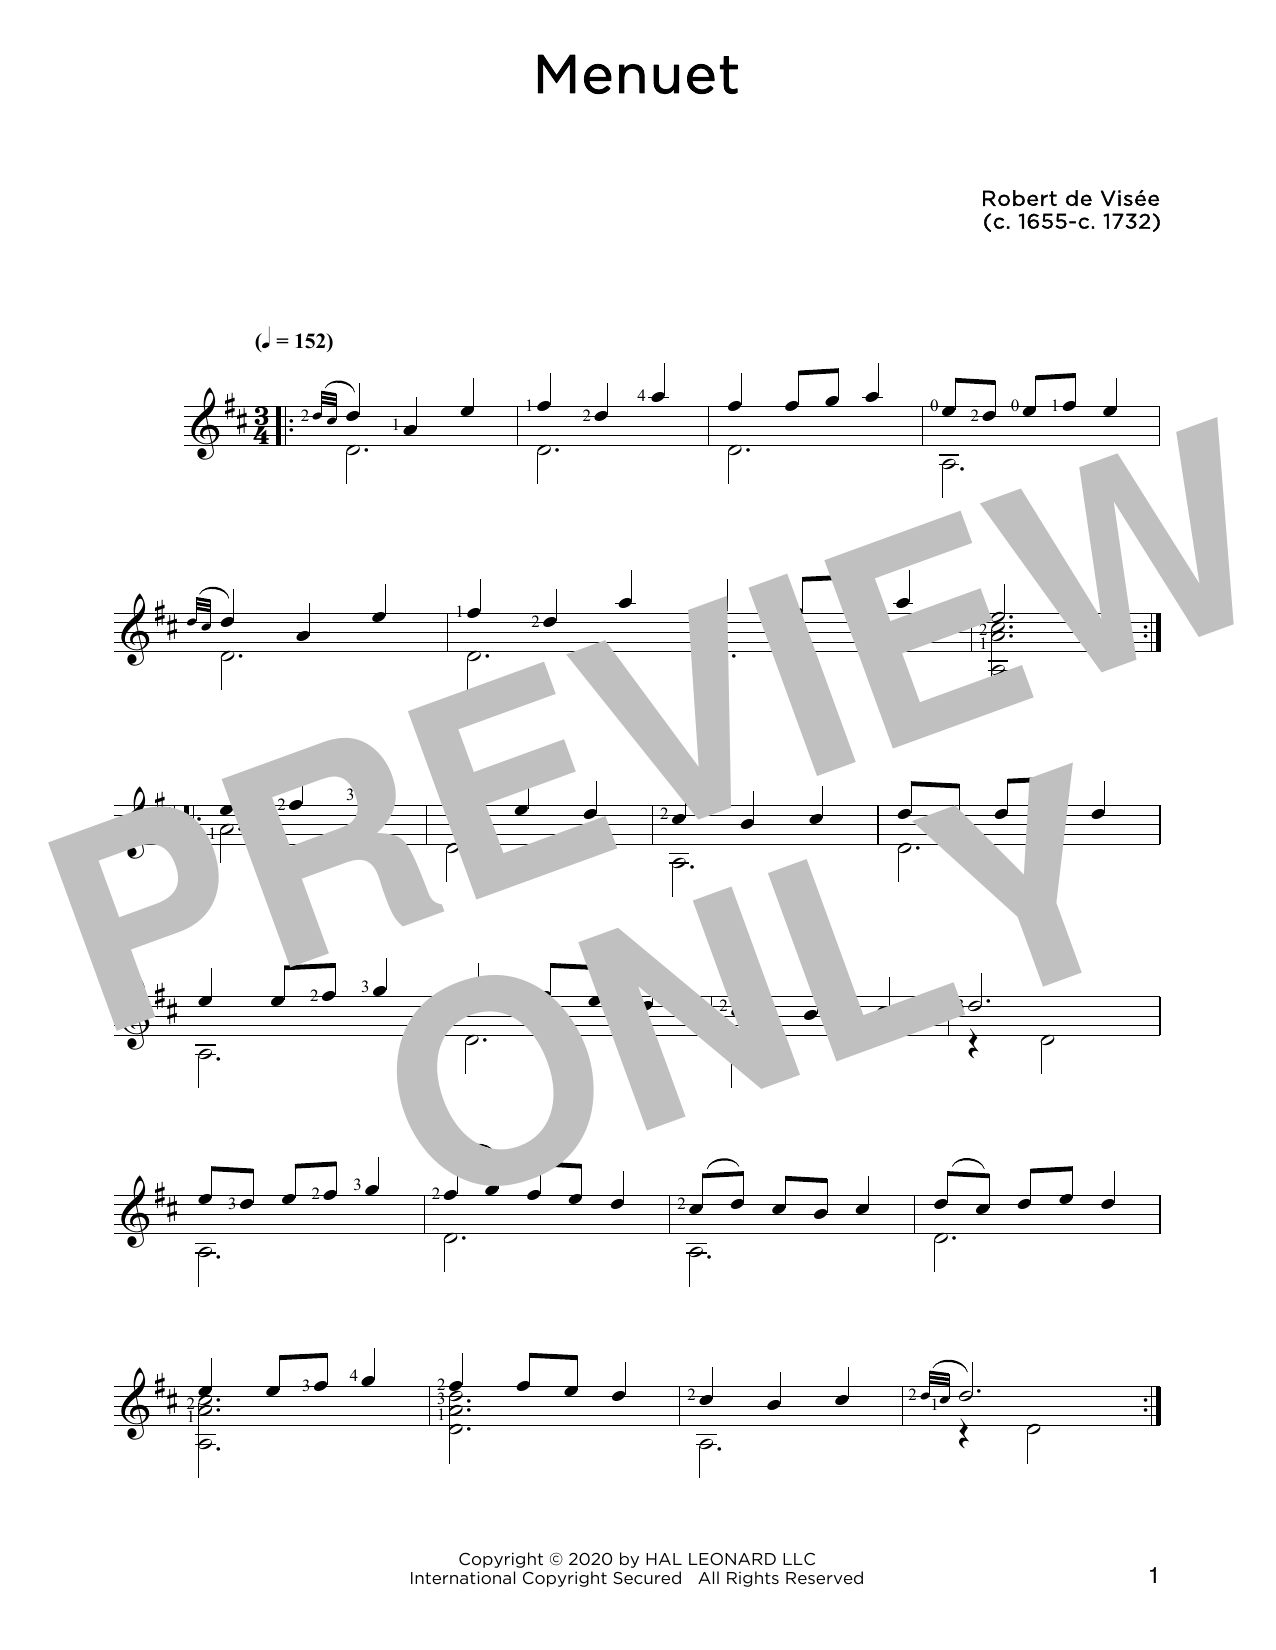 Robert de Visee Menuet Sheet Music Notes & Chords for Solo Guitar - Download or Print PDF